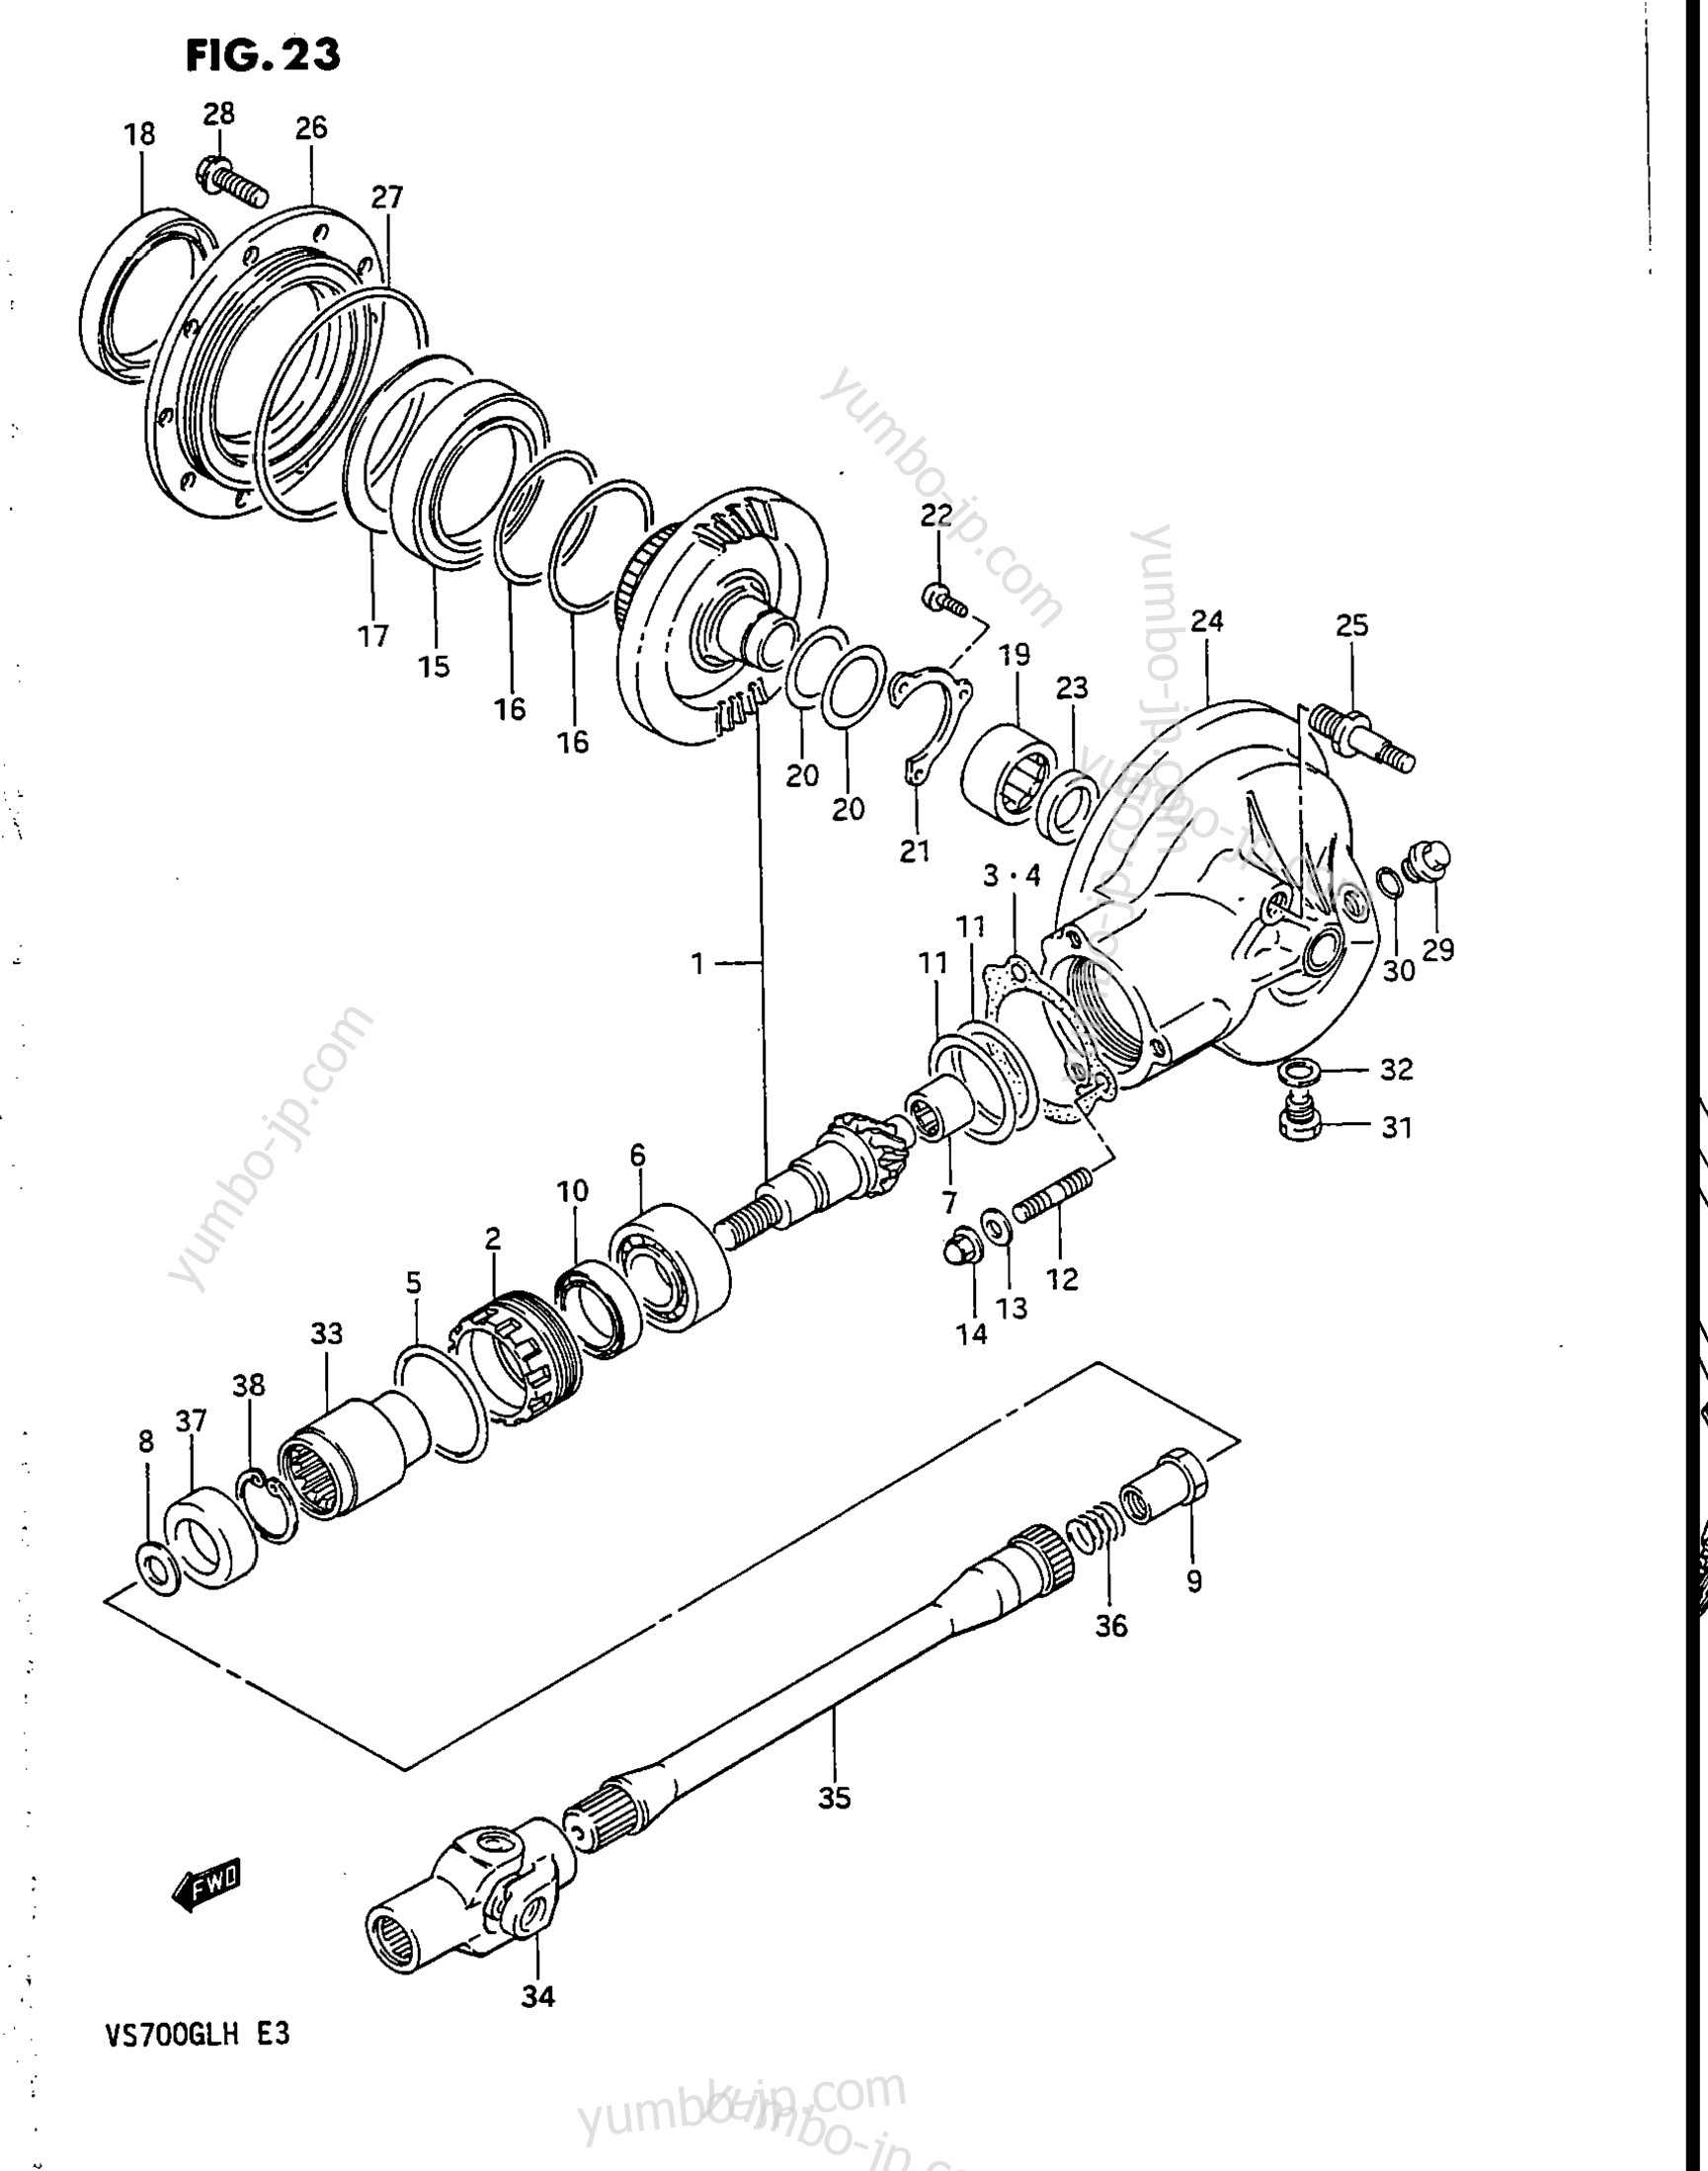 PROPELLER SHAFT - FINAL DRIVE GEAR for motorcycles SUZUKI Intruder (VS700GLEF) 1987 year